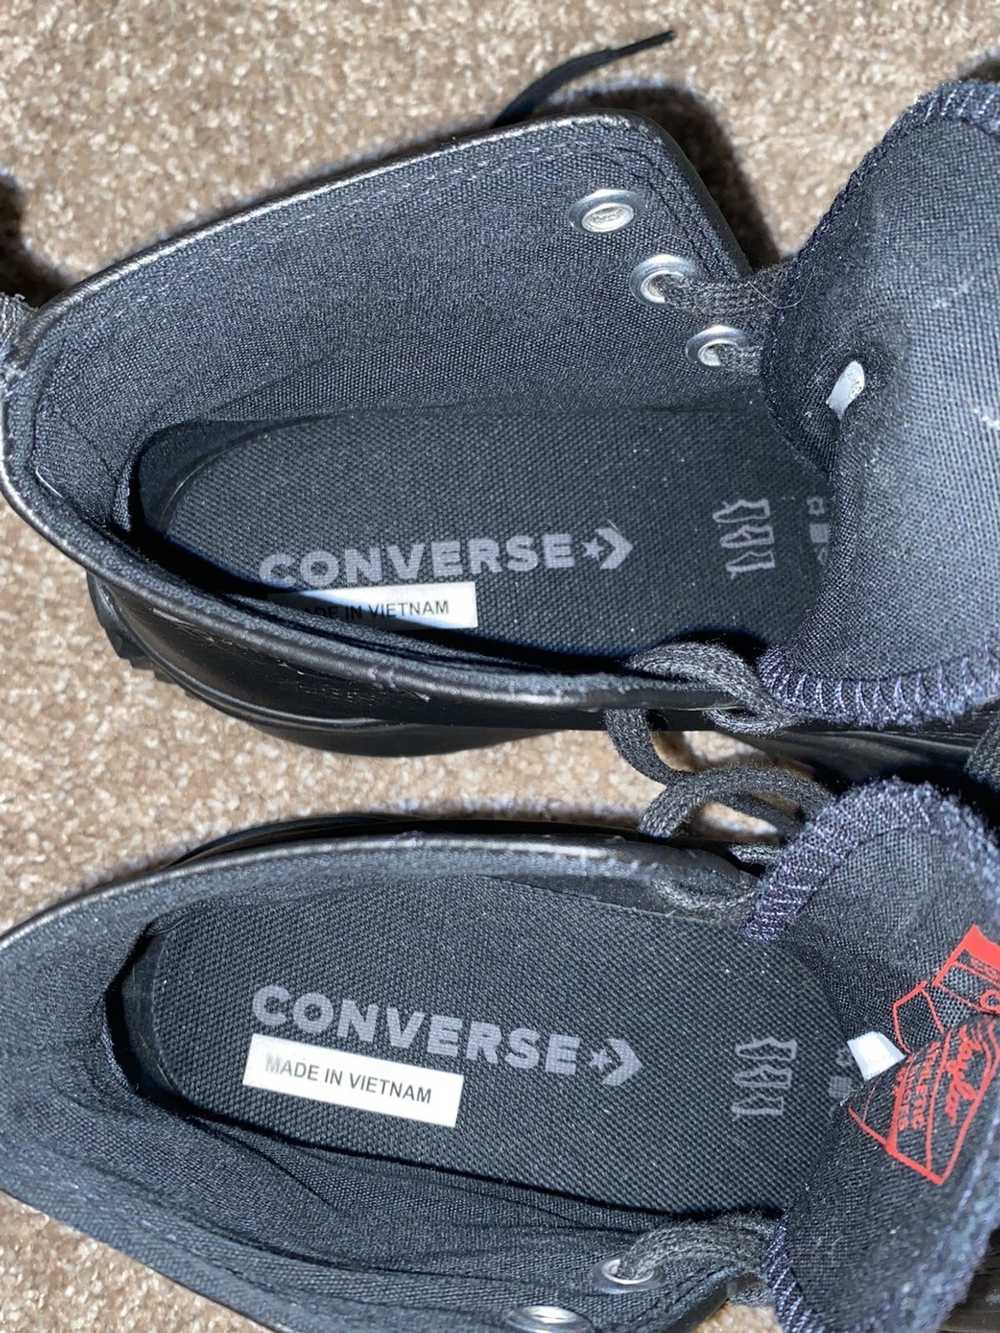 Converse Converse - image 10